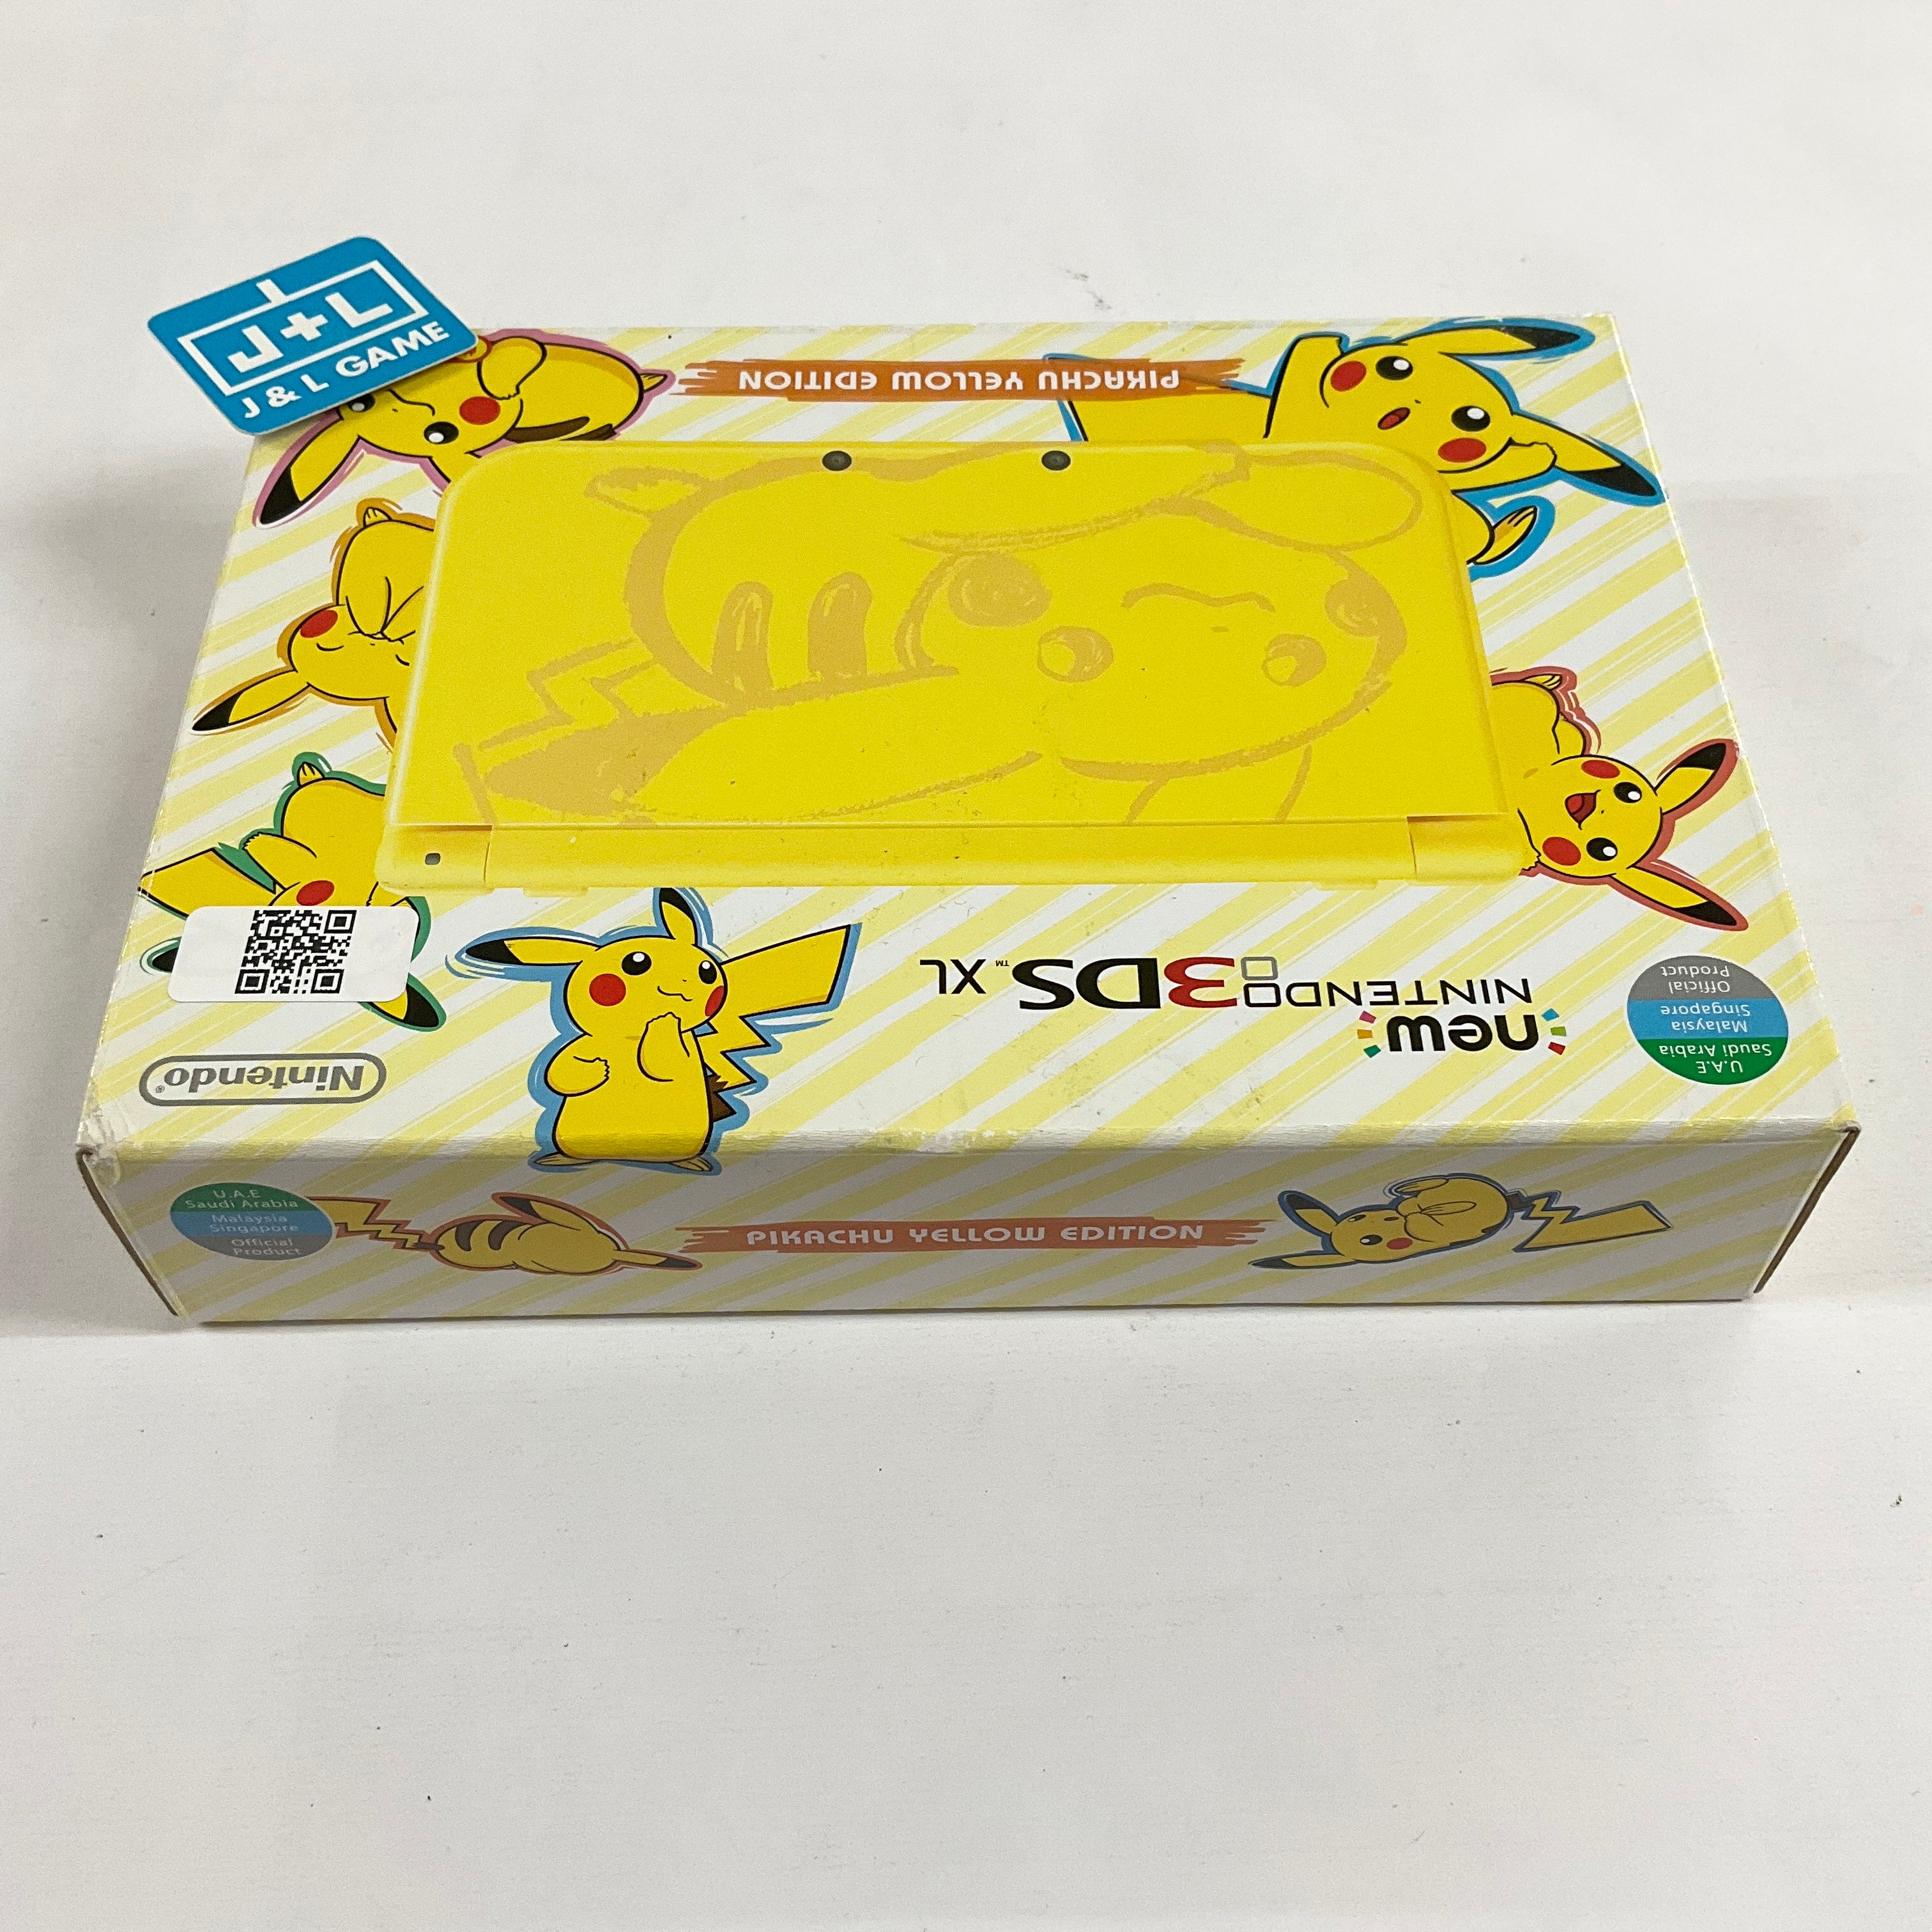 Nintendo New 3DS XL Console (Pikachu Yellow Edition) - Nintendo 3DS [Pre-Owned] Consoles Nintendo   